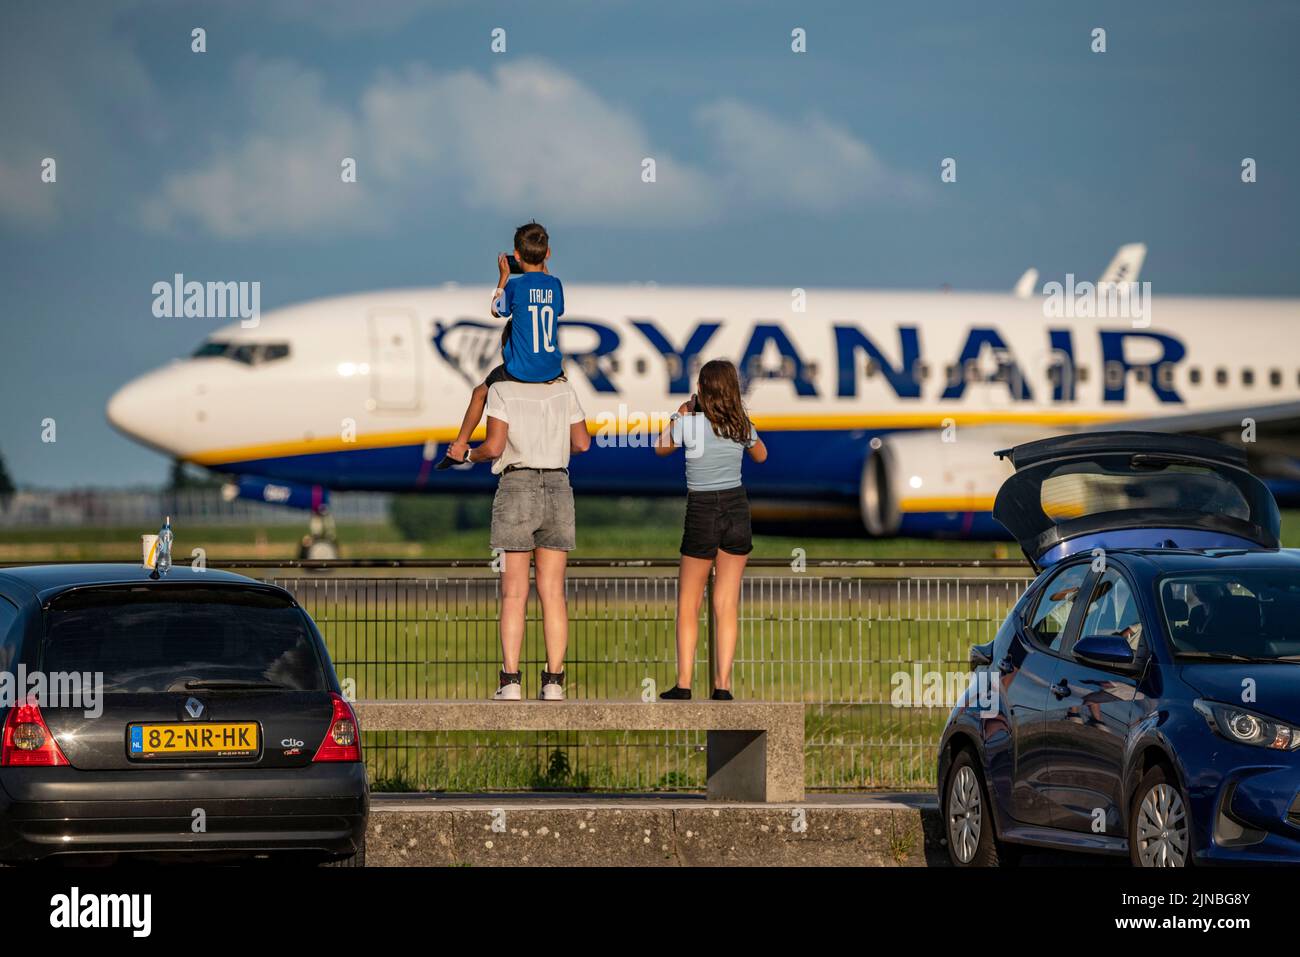 Amsterdam Shiphol Airport, Polderbaan, one of 6 runways, spotter spot, see planes up close, Ryanair, Stock Photo